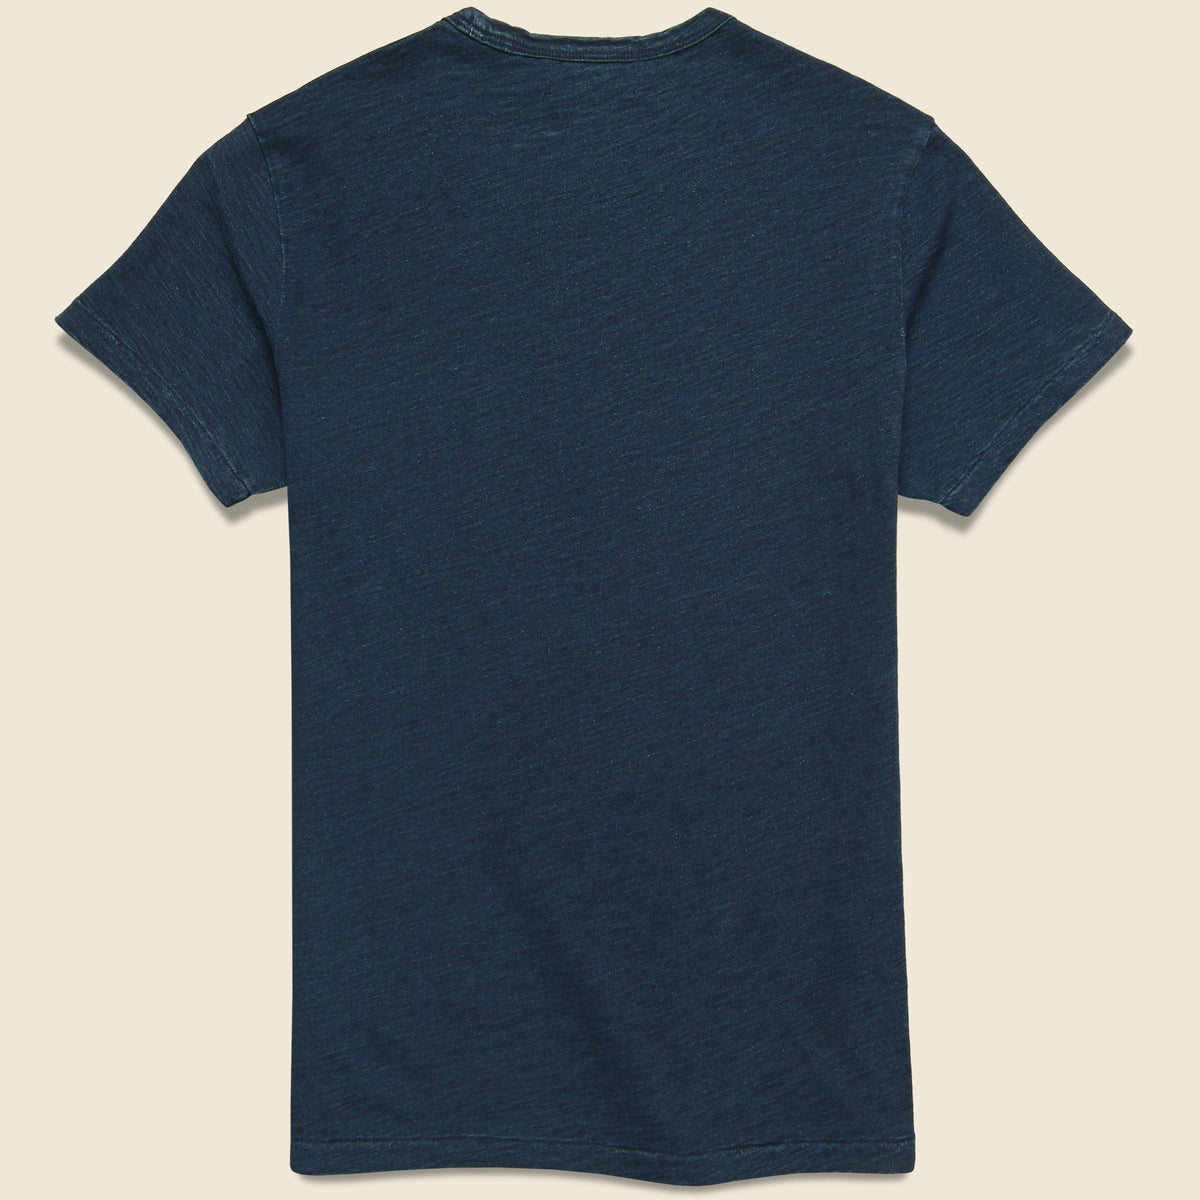 Indigo Cotton Crewneck T-Shirt - Indigo